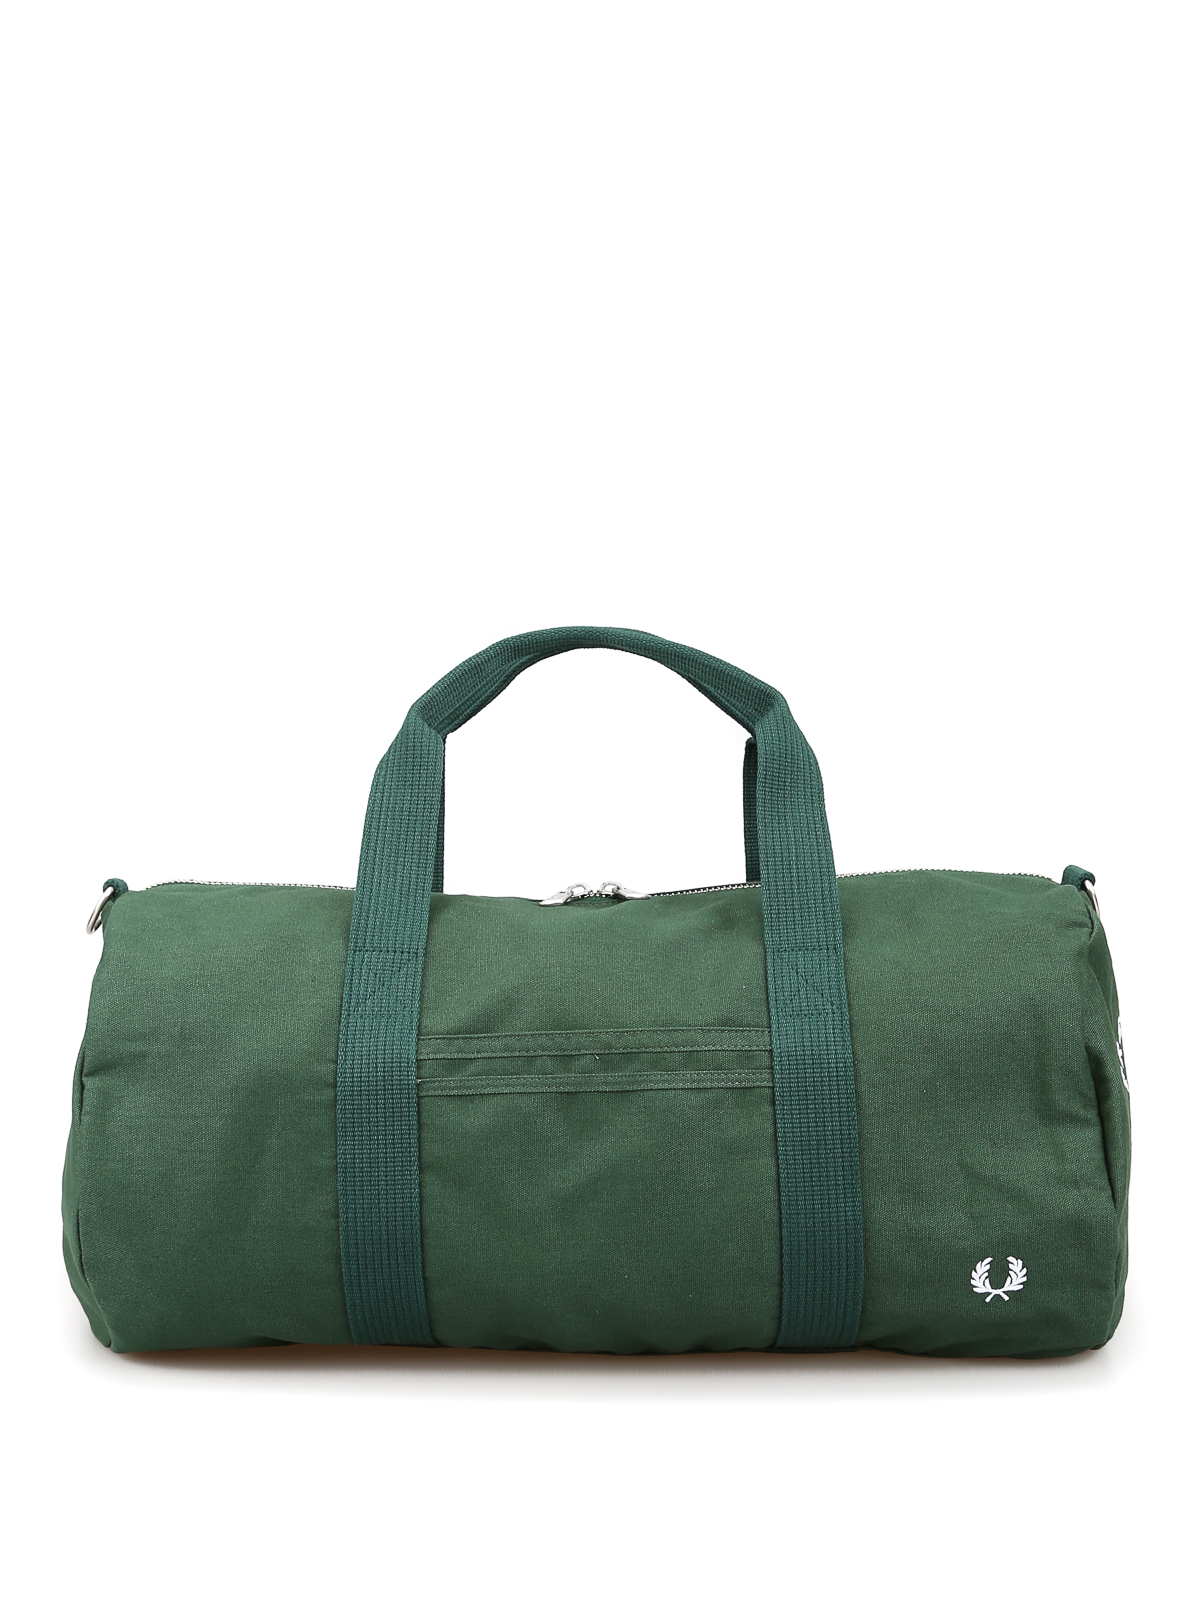 Verwant Asser medeklinker Sport bags Fred Perry - Branded tartan green canvas duffle bag - L5277145